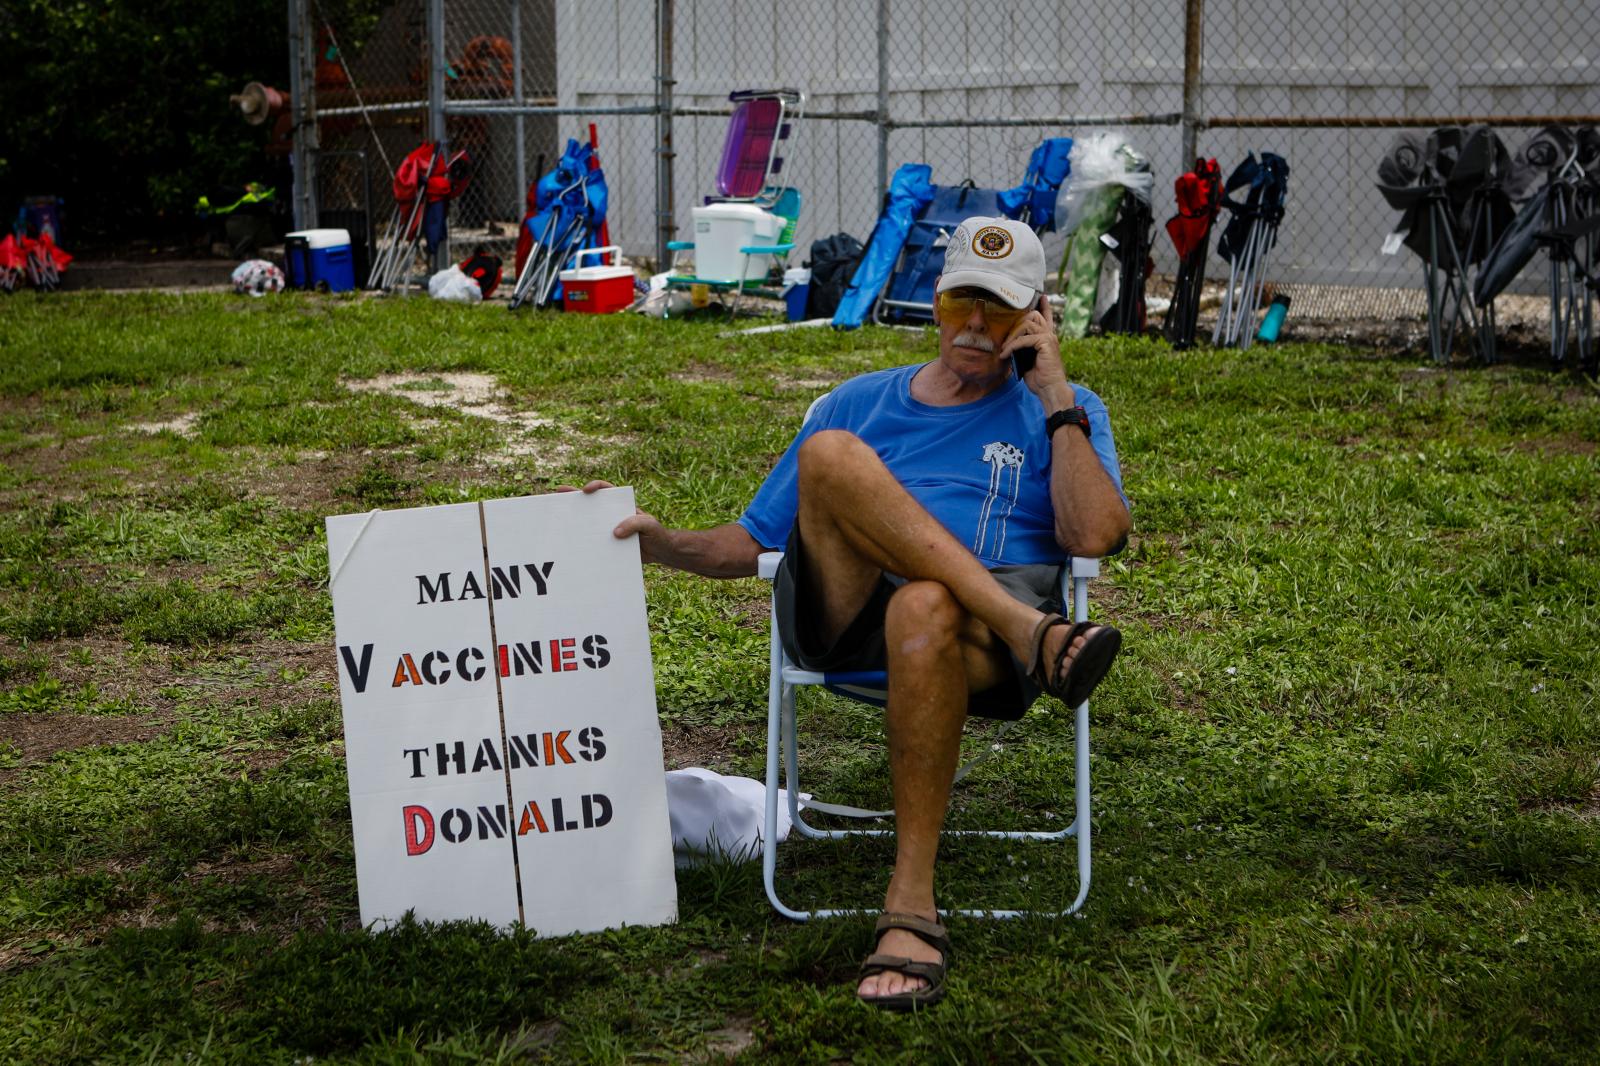 SARASOTA, FL - JULY 03: A man h...a Marie Uzcategui/Getty Images)